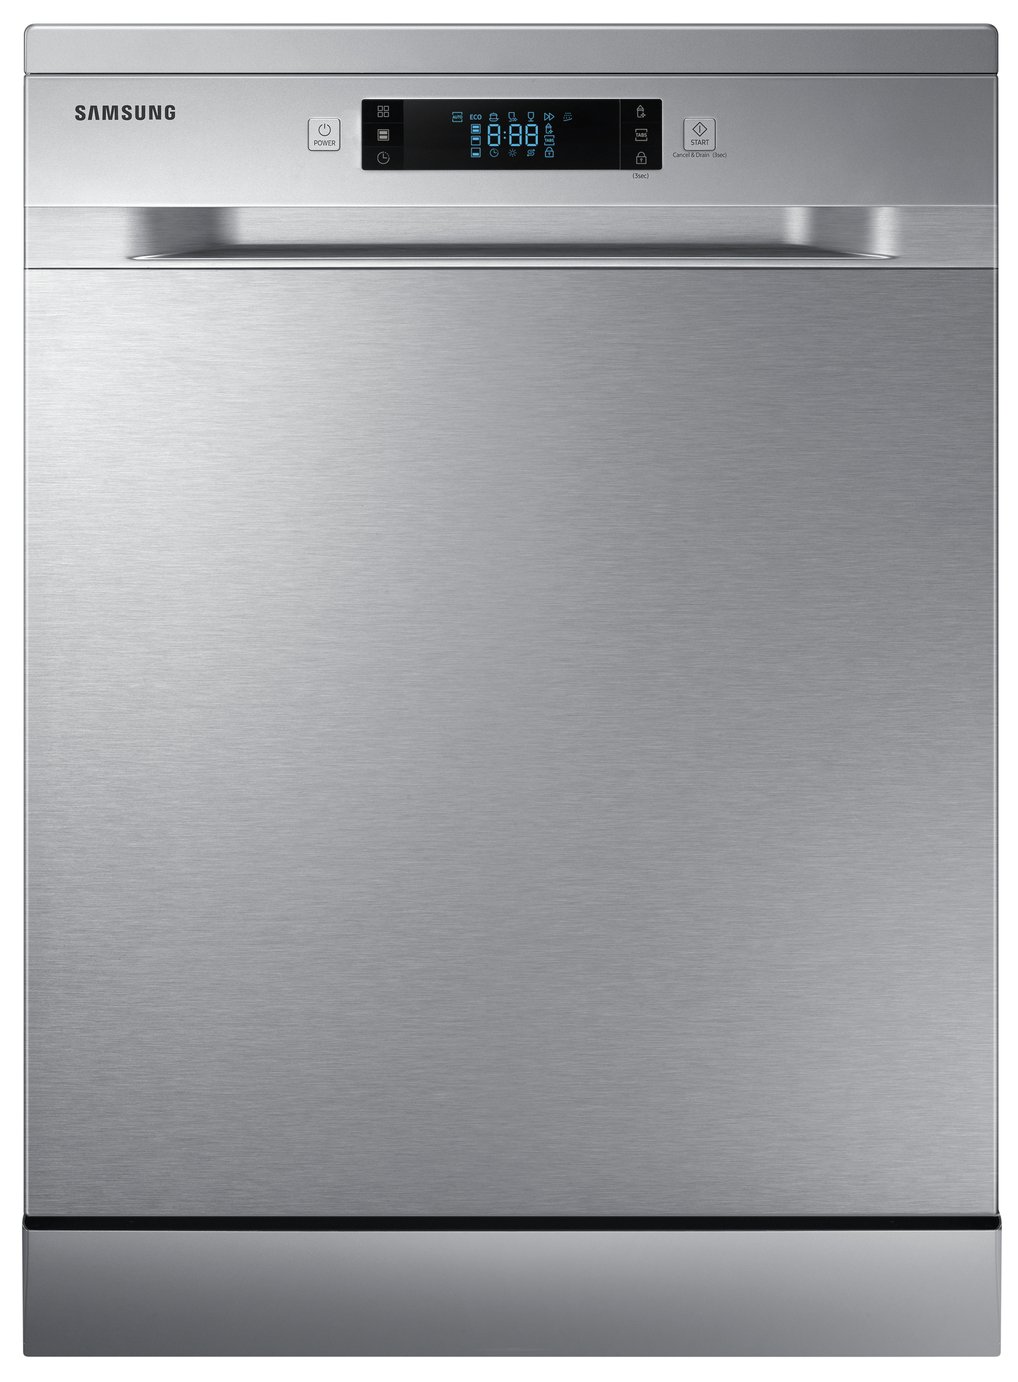 Samsung Series 6 DW60M6050FS Full Size Dishwasher – Silver